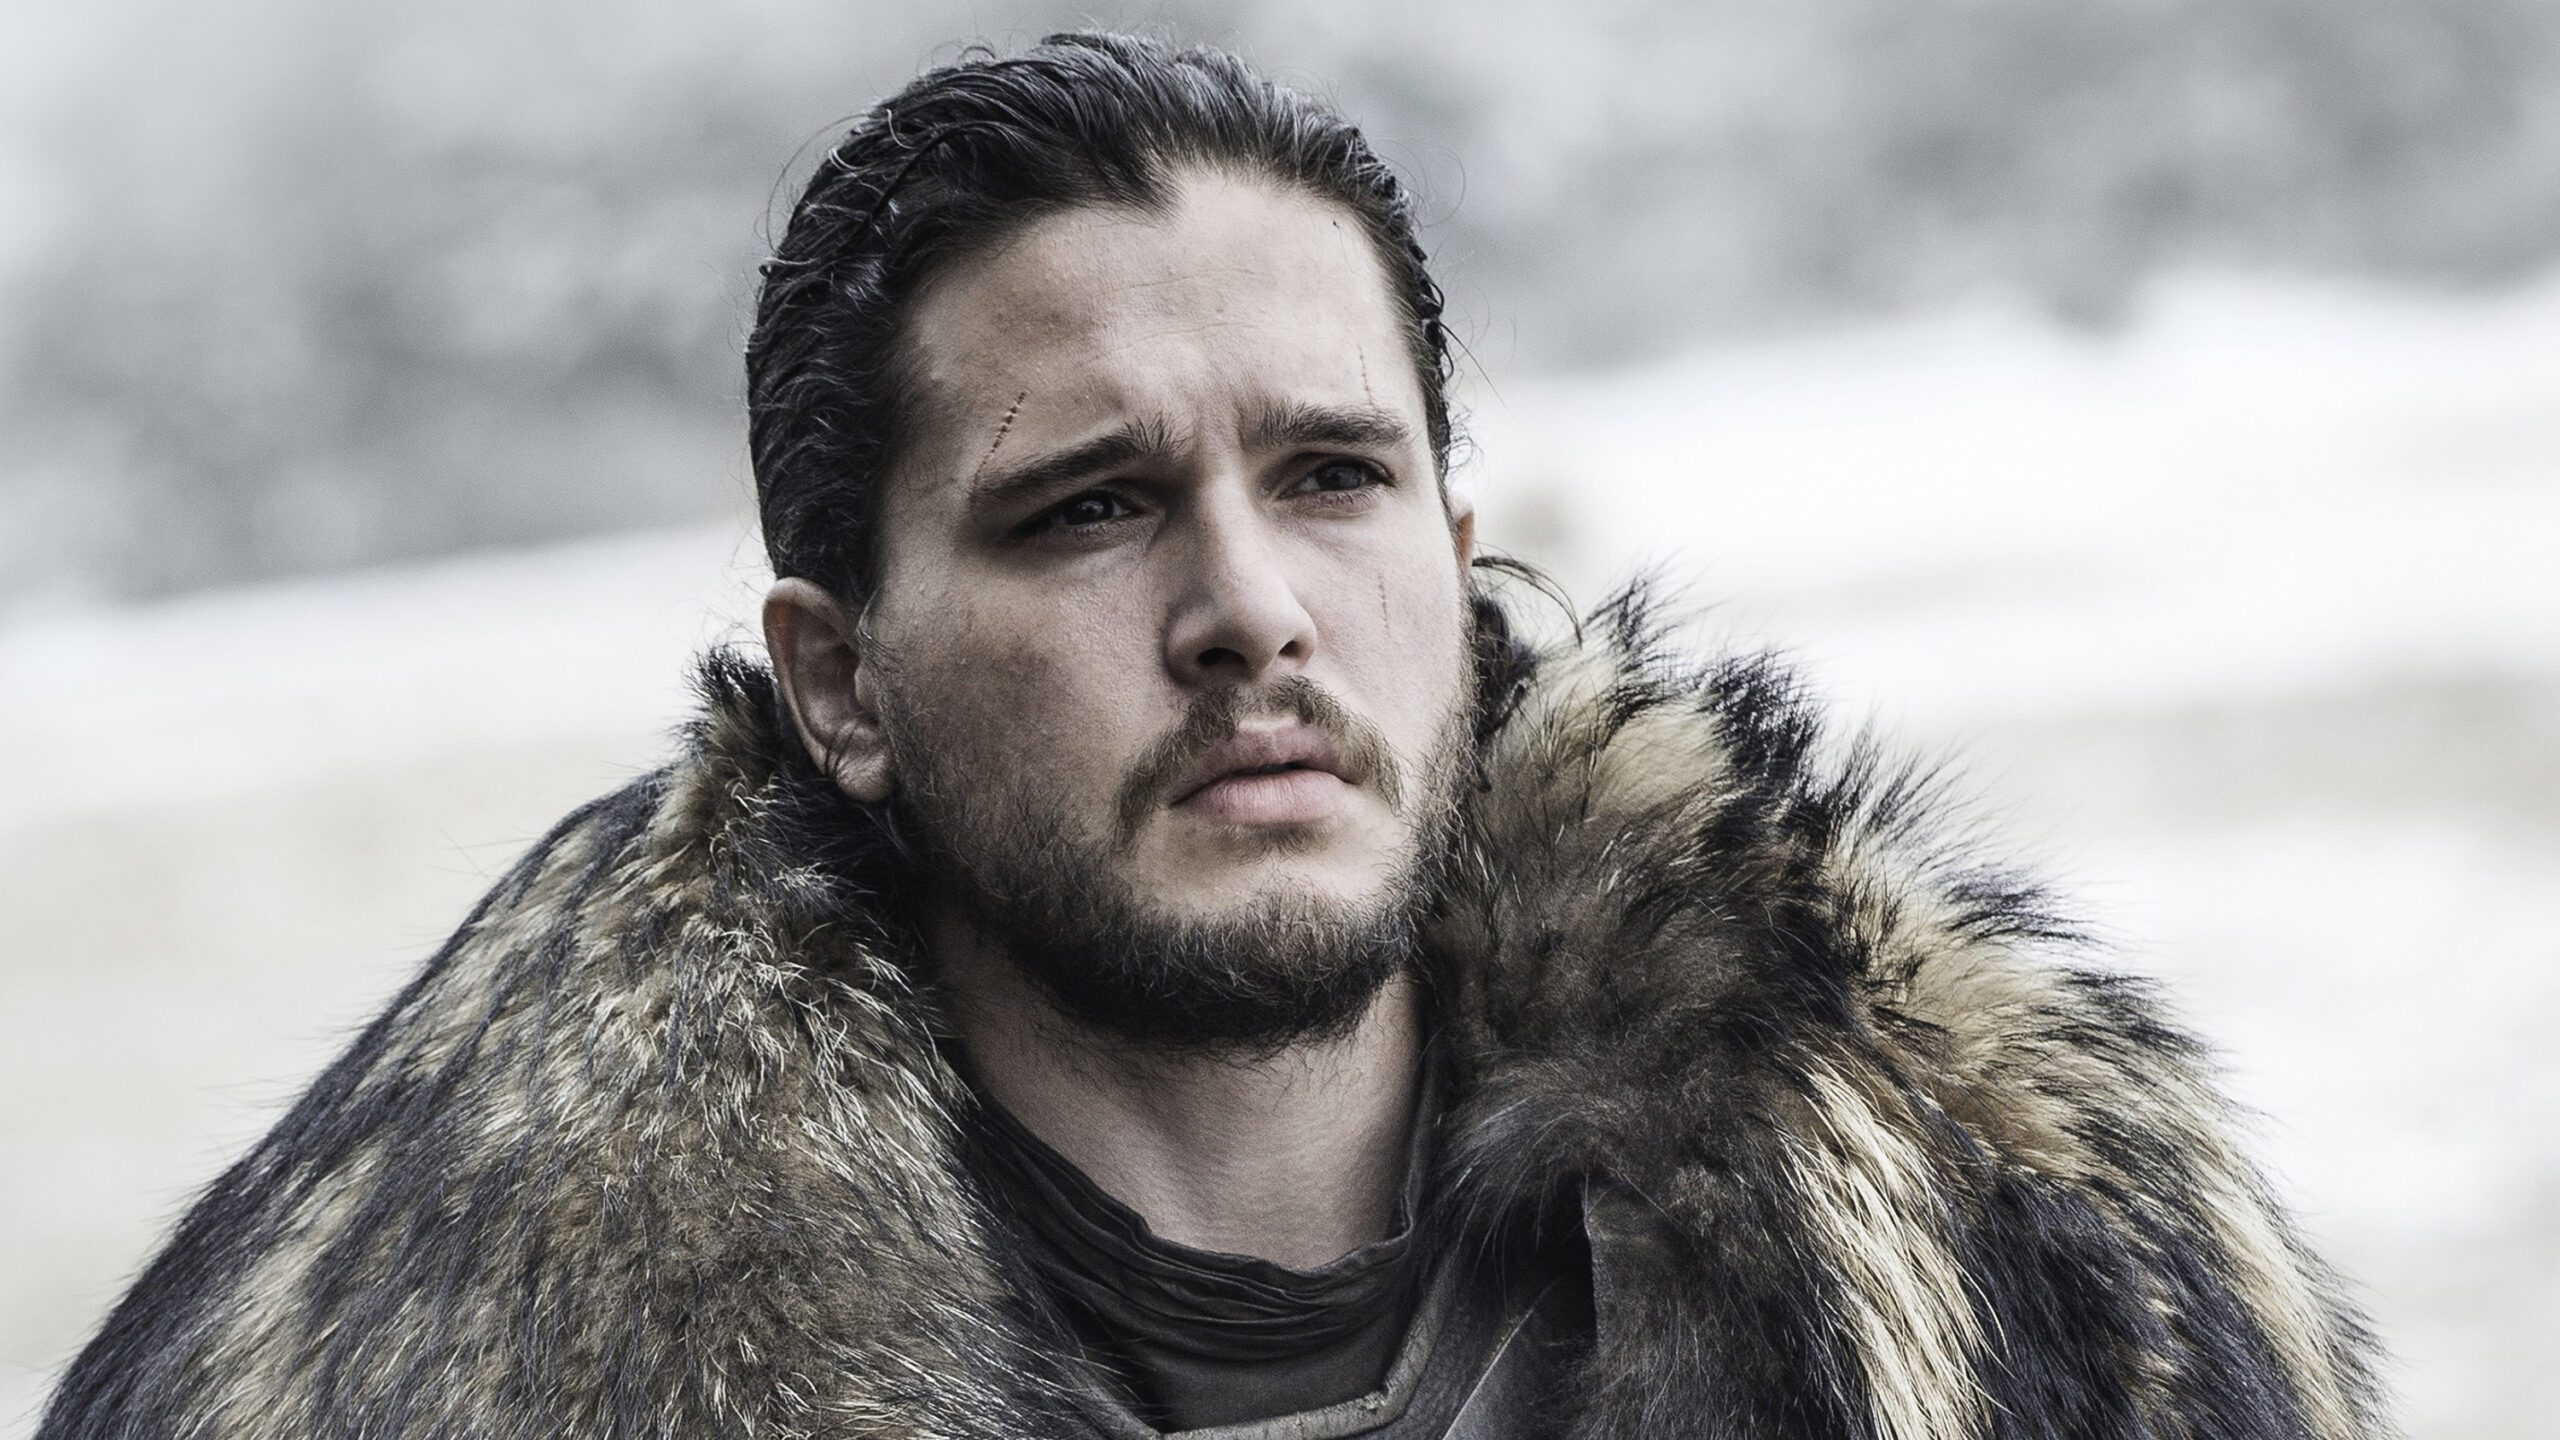 WATCH: New ‘Game of Thrones’ season 7 teaser